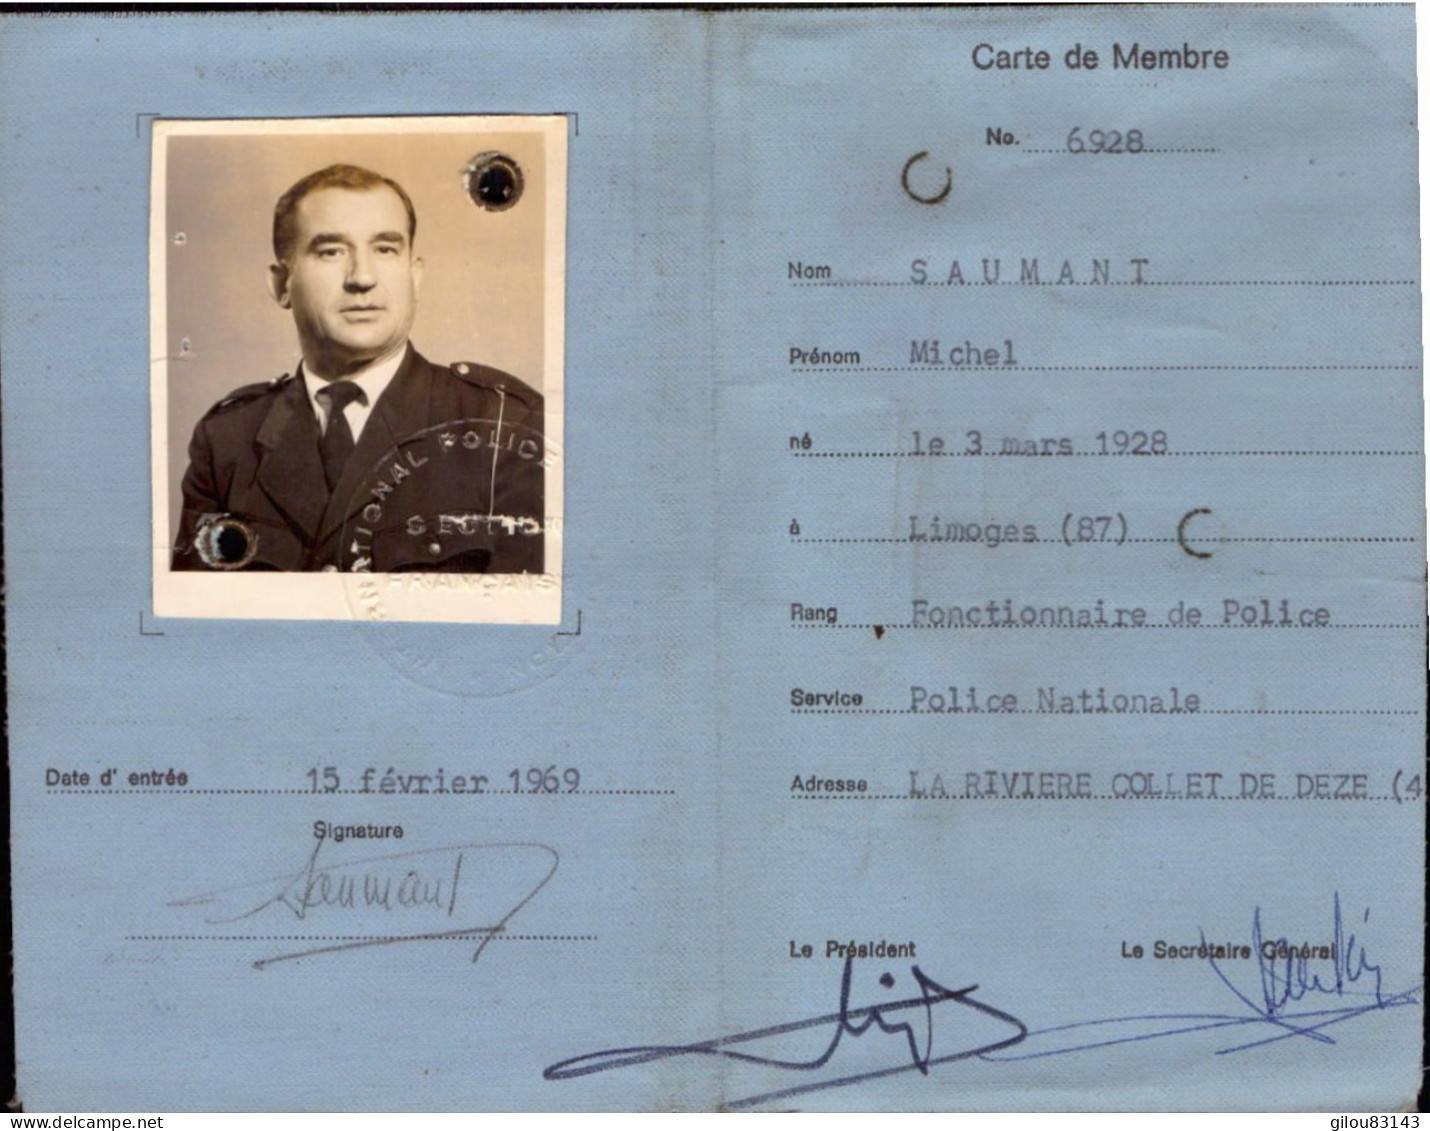 Carte, International Police Association, Section Française, 1969 - Mitgliedskarten